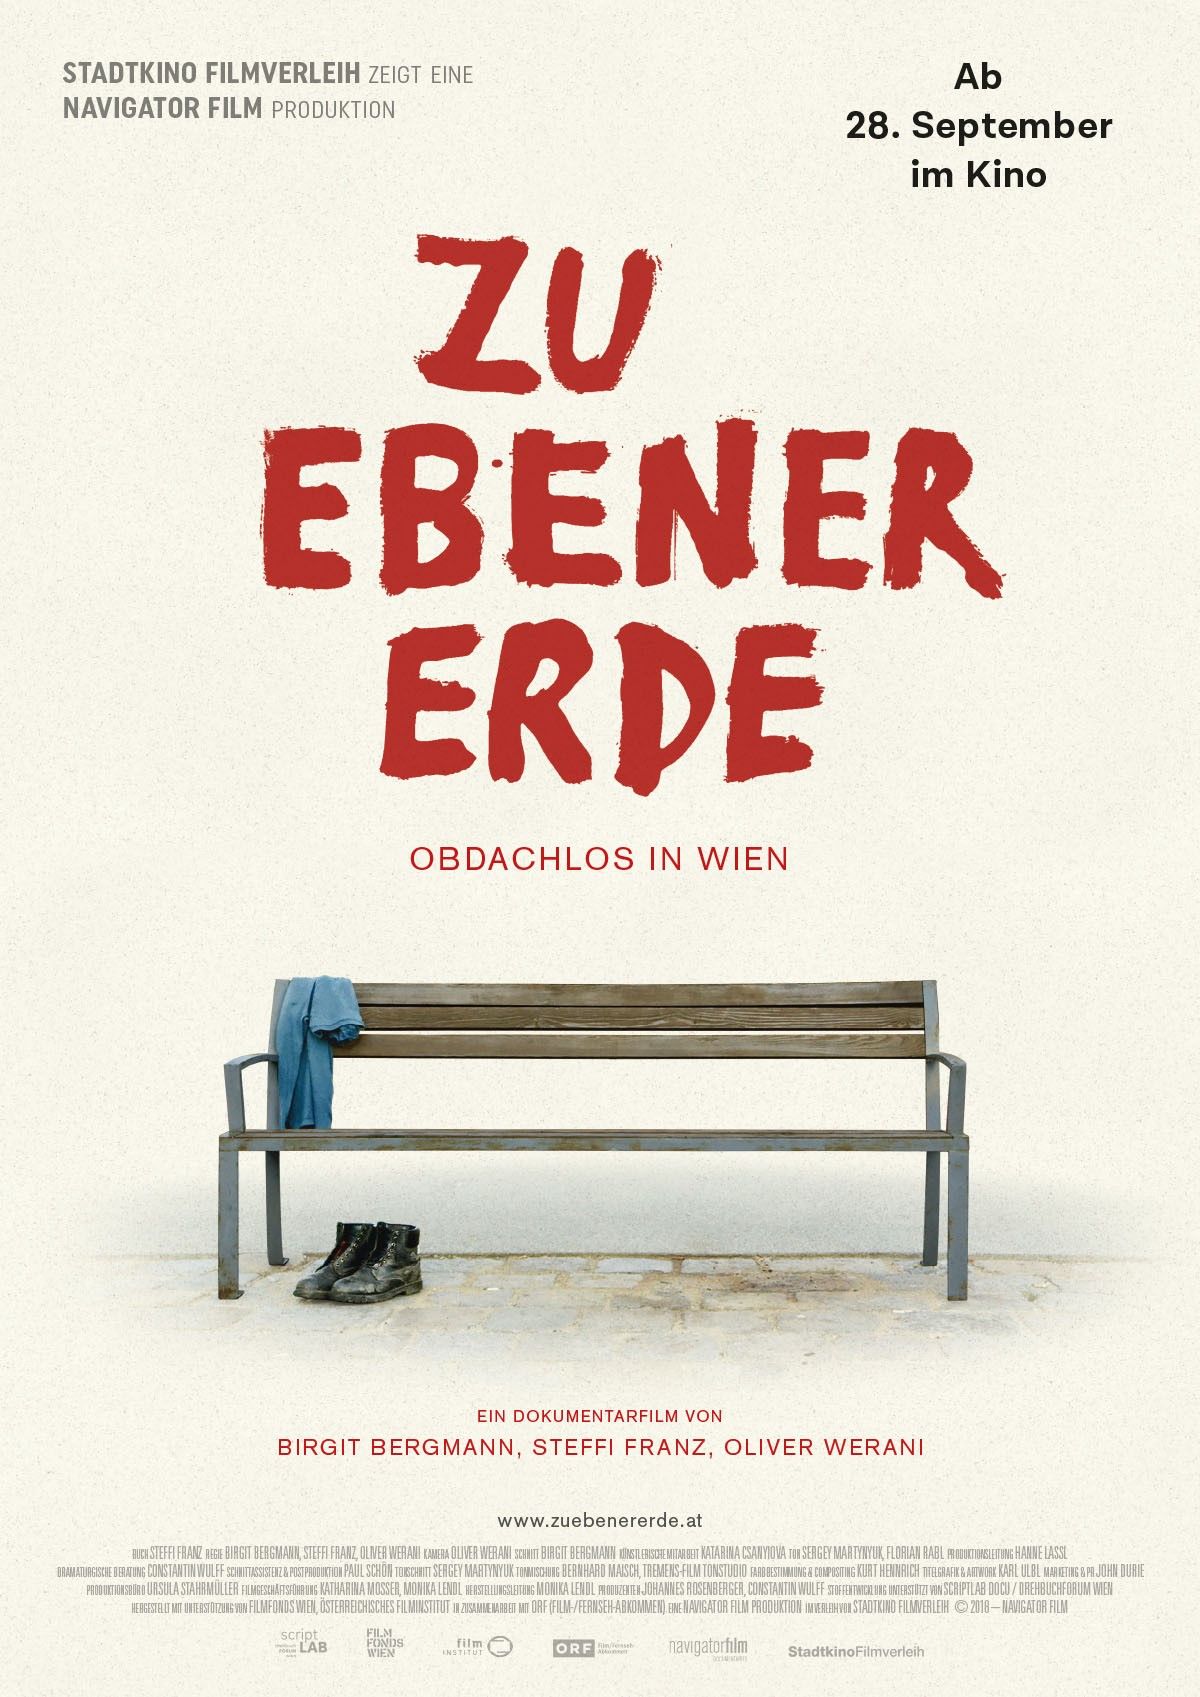 © Sujet Zu ebener Erde. Obdachlos in Wien, Navigator Film